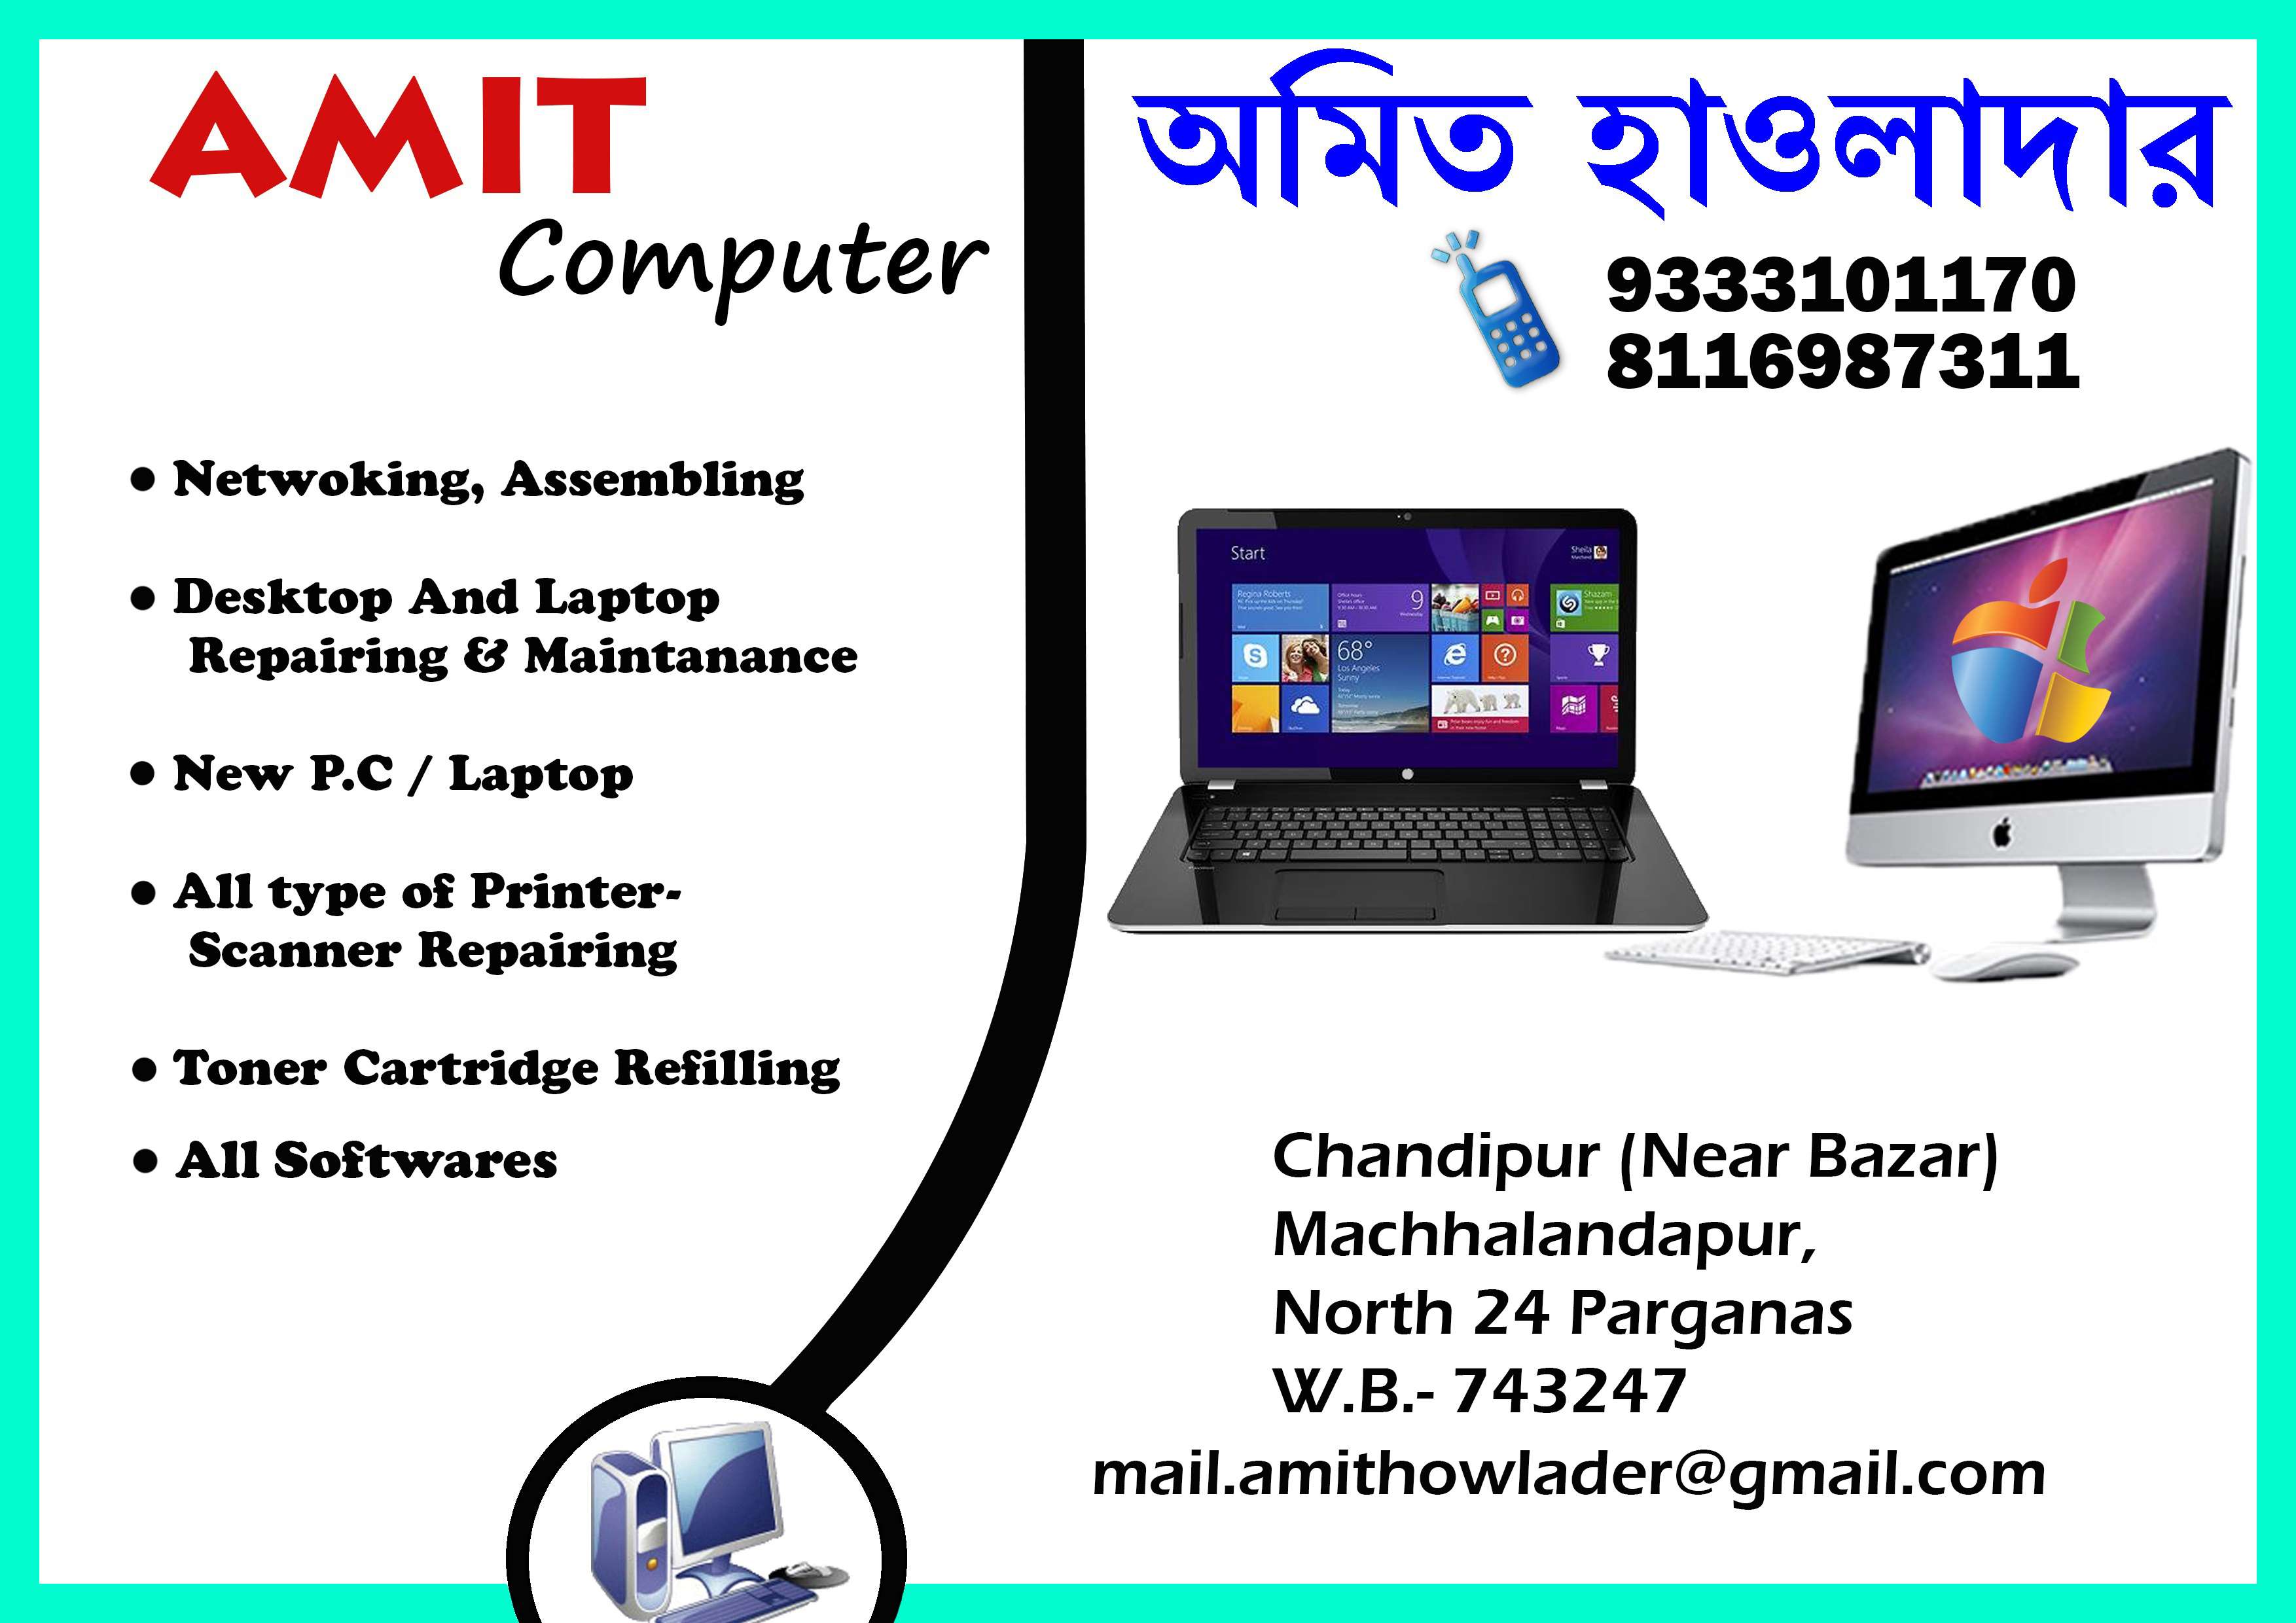 Amit Computer